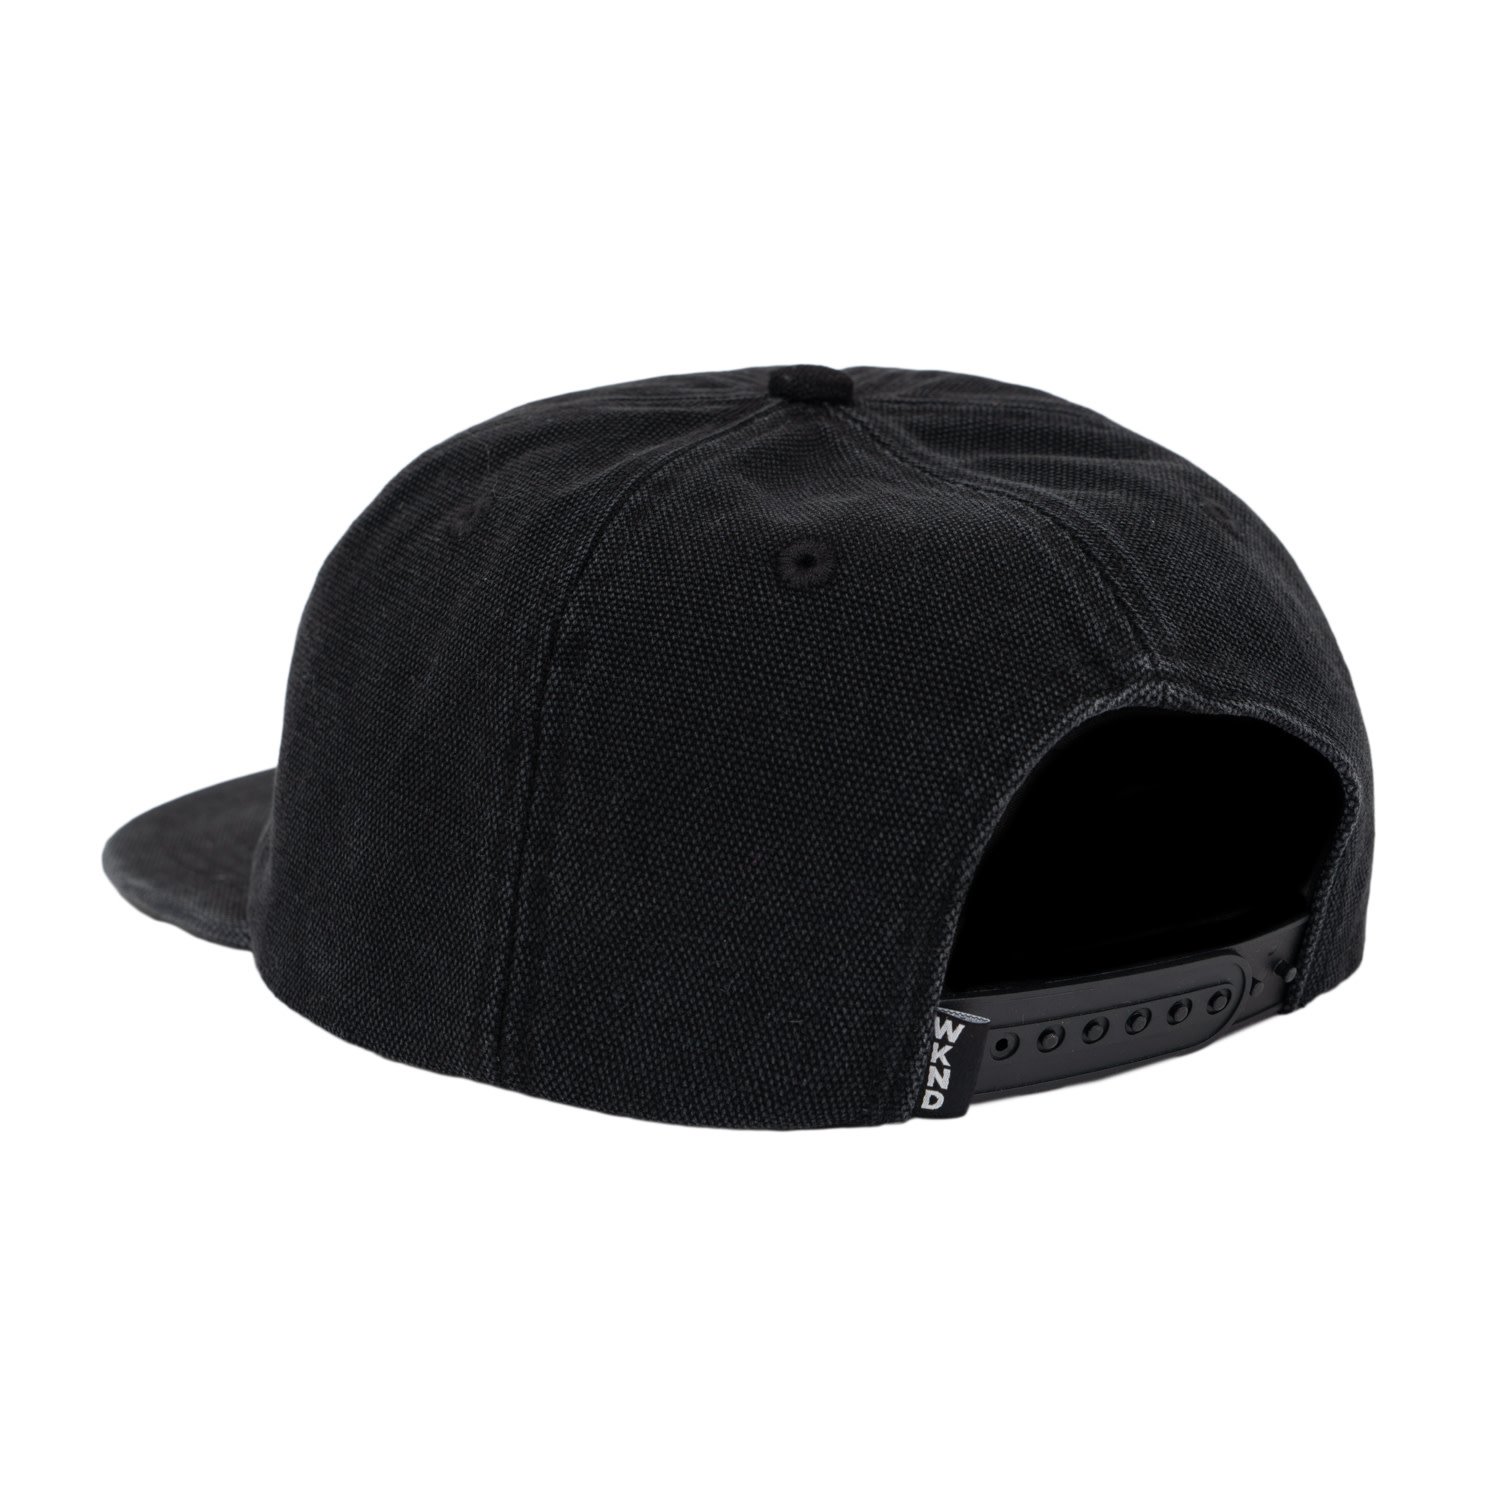 WKND Fishbone Hat Washed Black